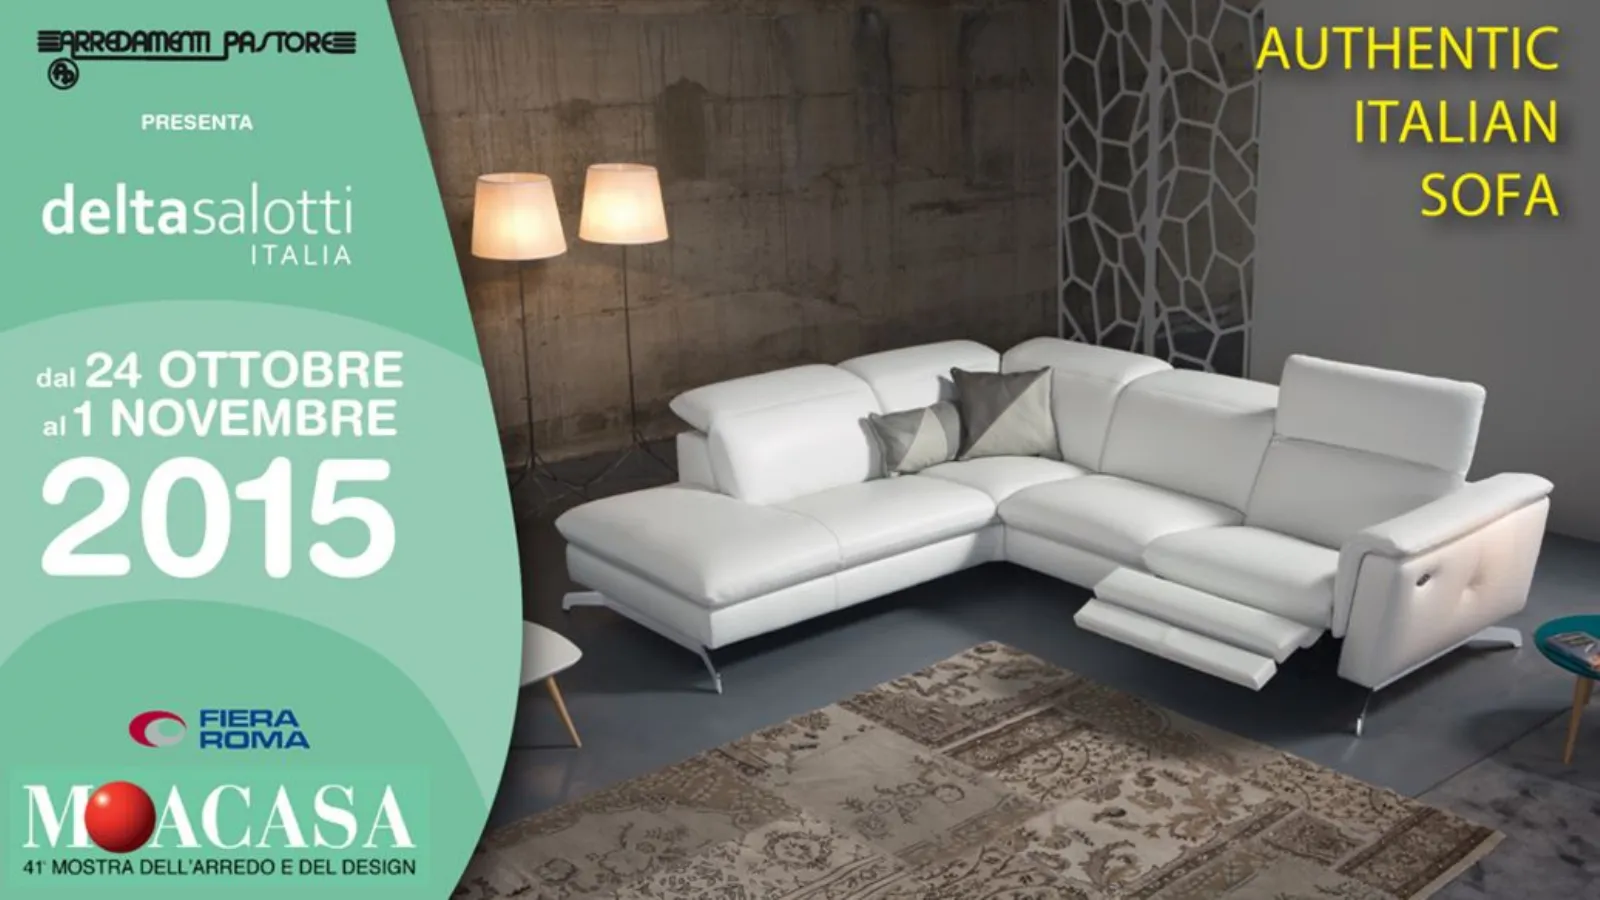 Moa Casa 2015 Furniture and design exhibition